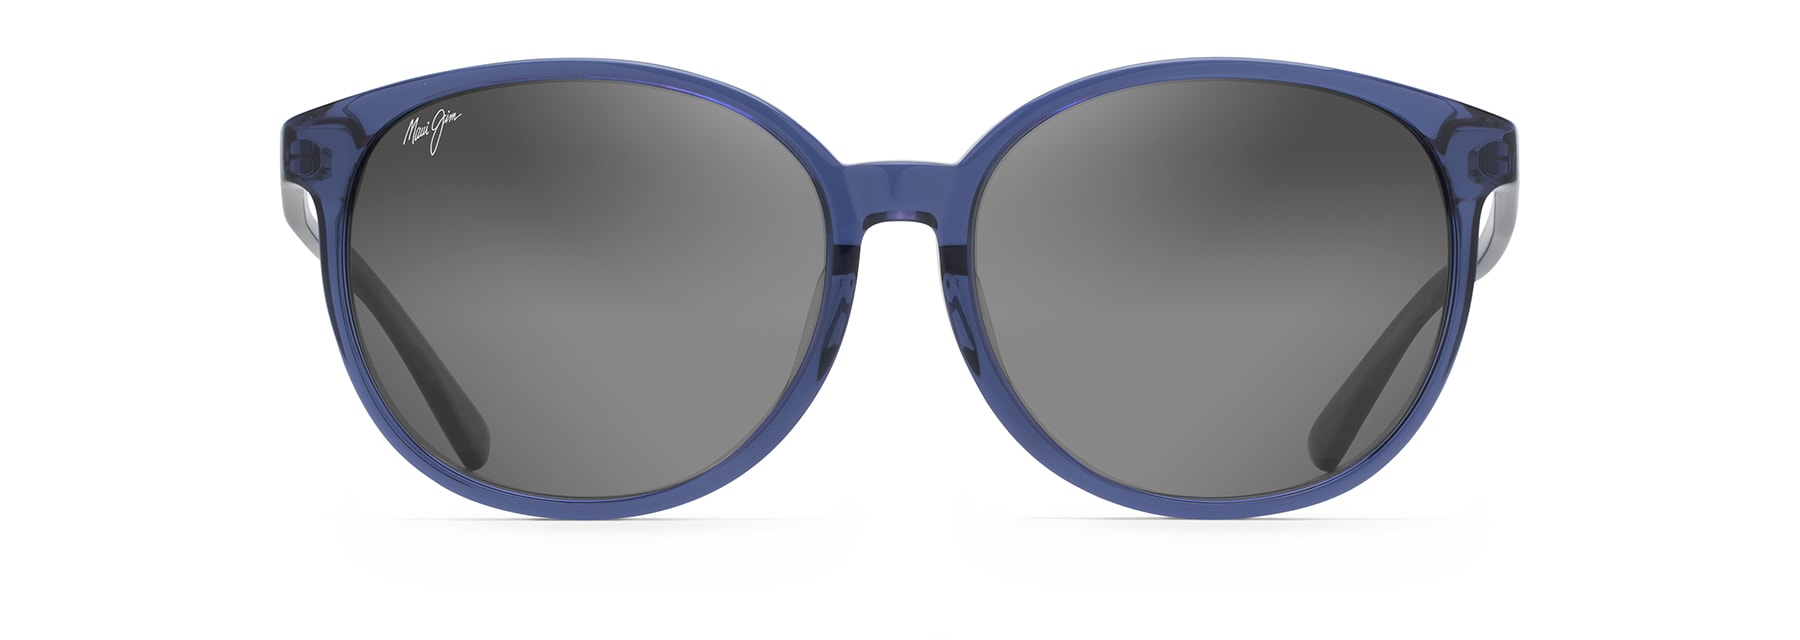 maui jim blue water sunglasses